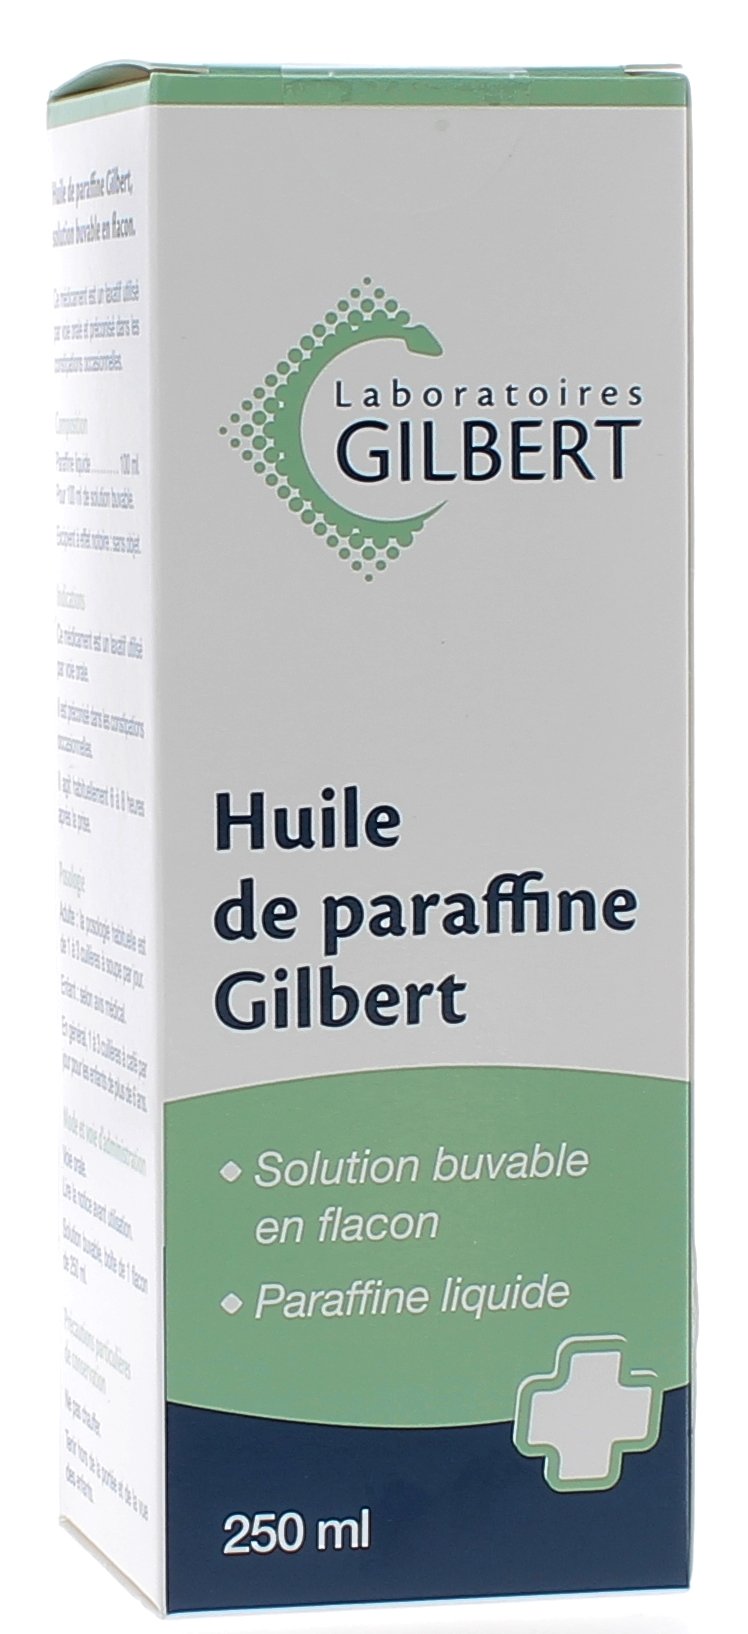 Huile de paraffine Gilbert solution buvable en flacon 250ml